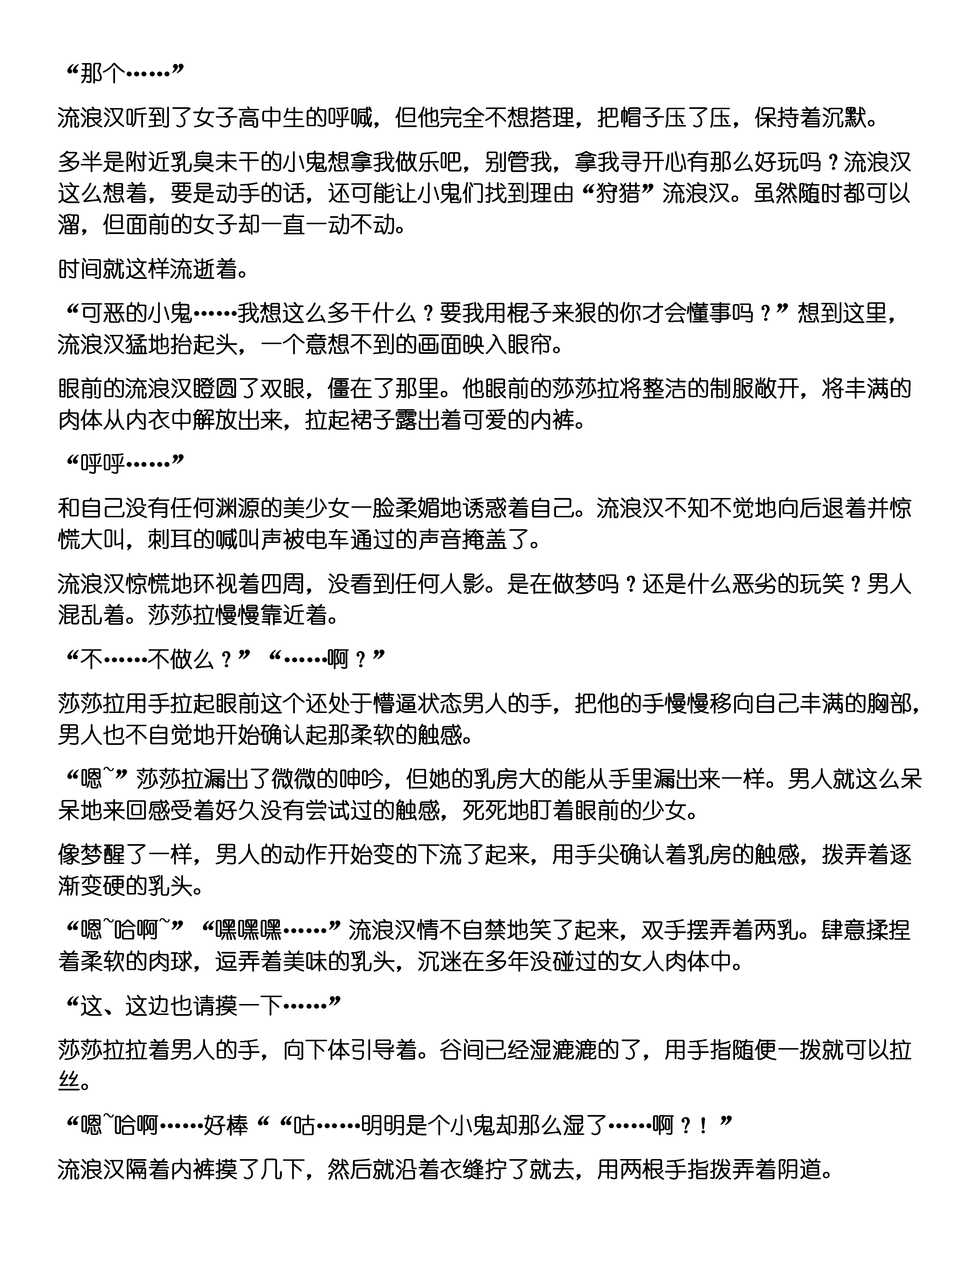 sasara x homeless (chinese trainslation) - Page 4